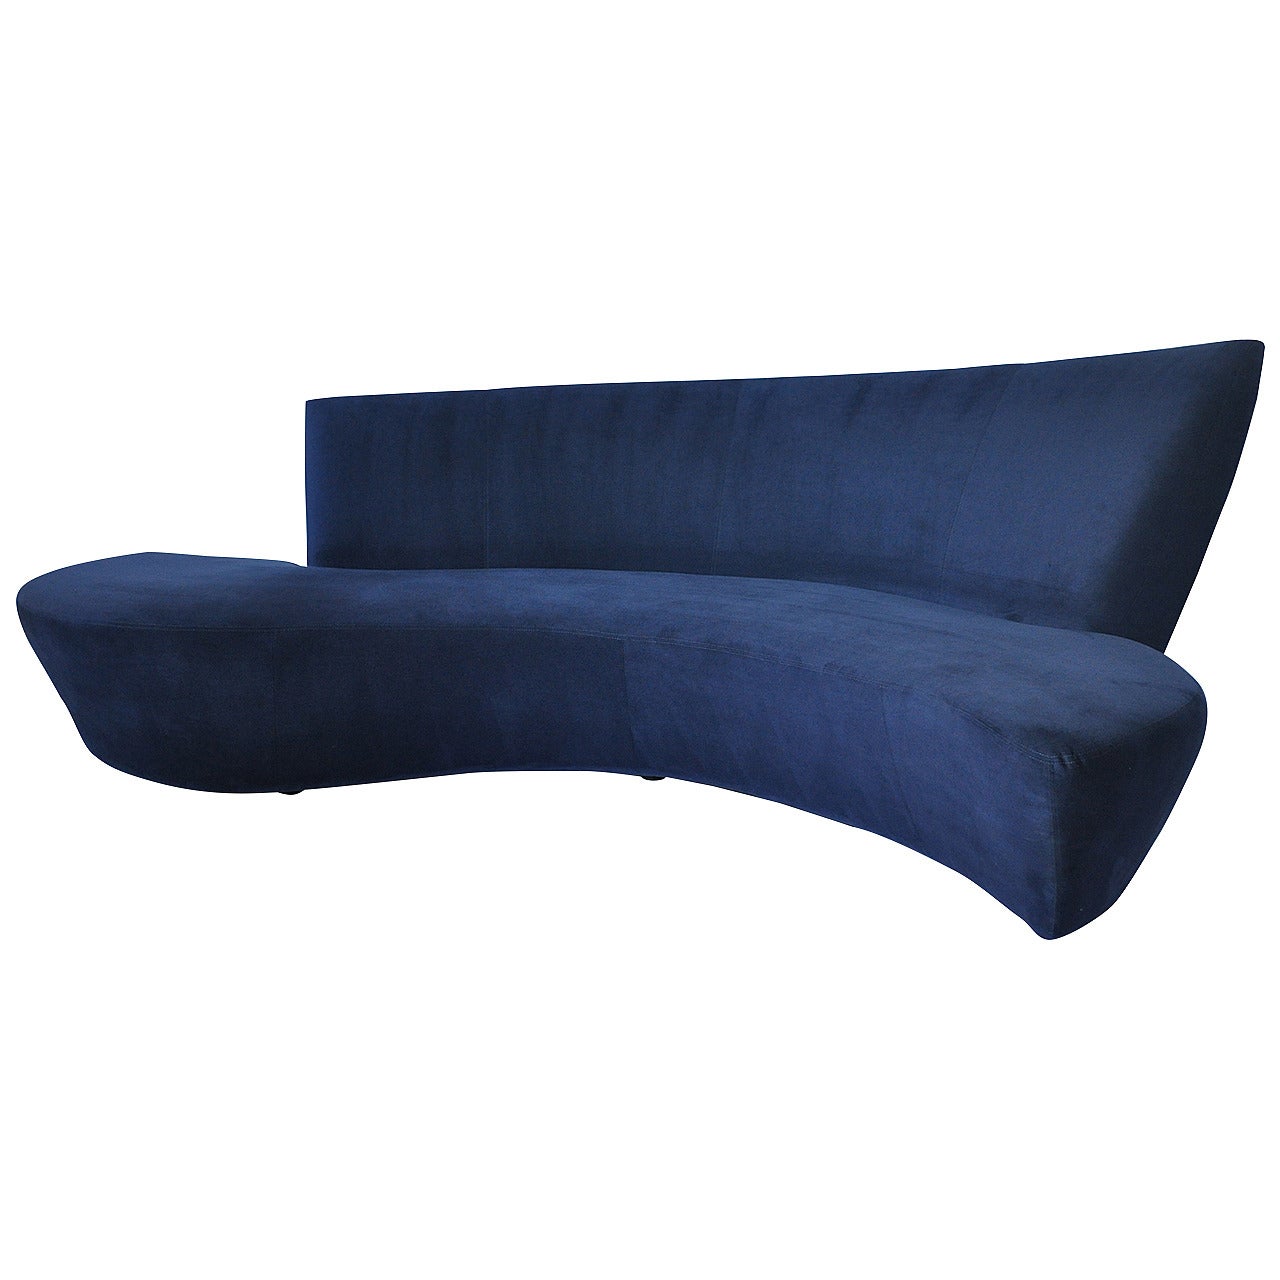 Vladimir Kagan Bilbao Curved Sculptural Sofa for Weiman Preview